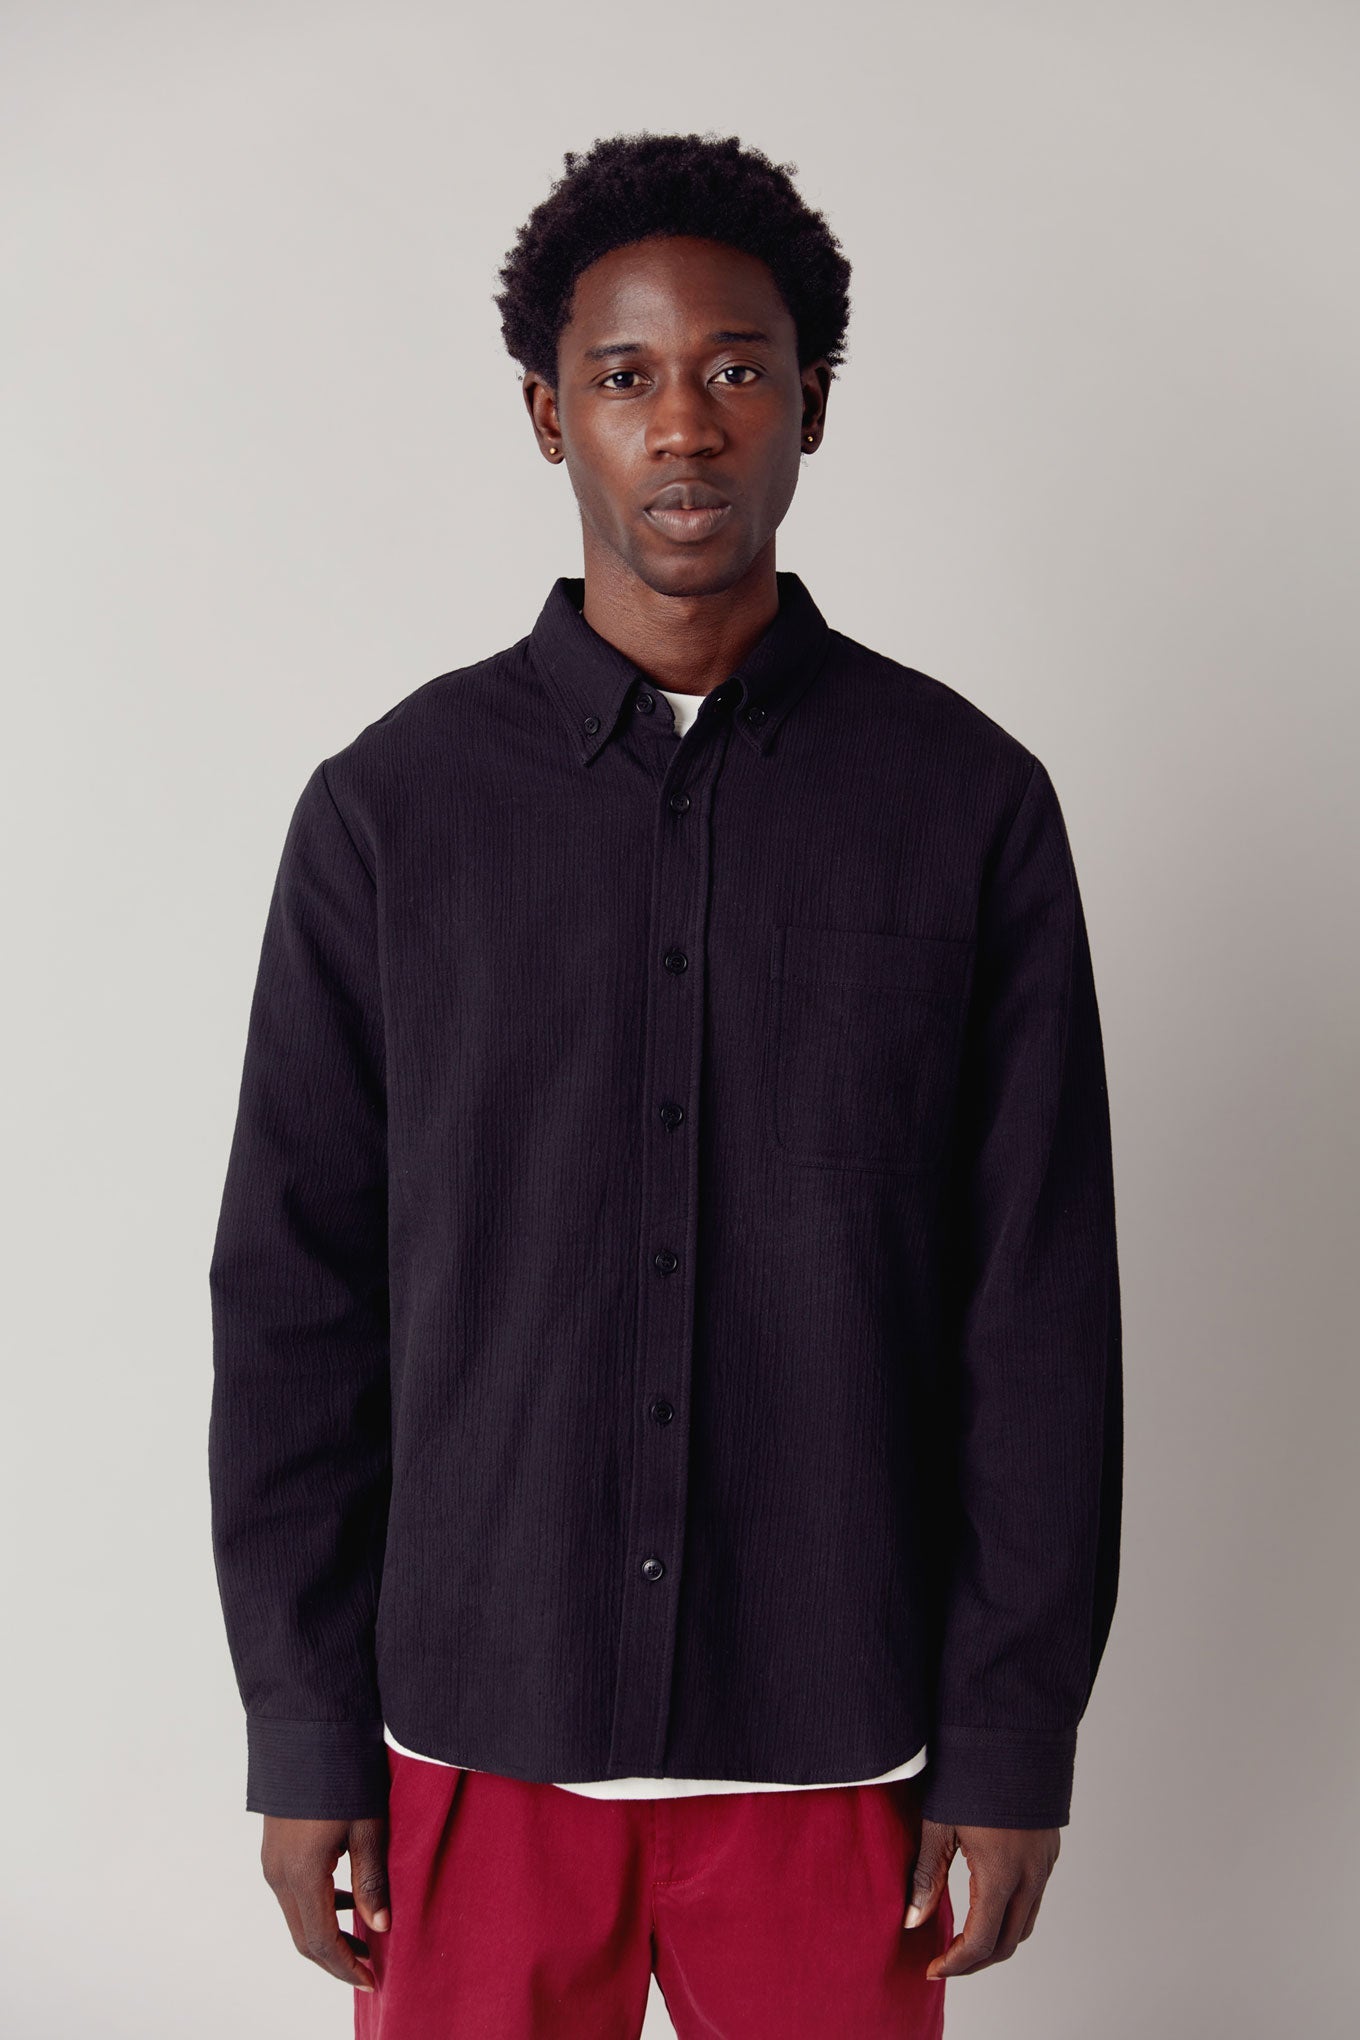 Black, long-sleeved SPECTER shirt made of organic cotton from Komodo